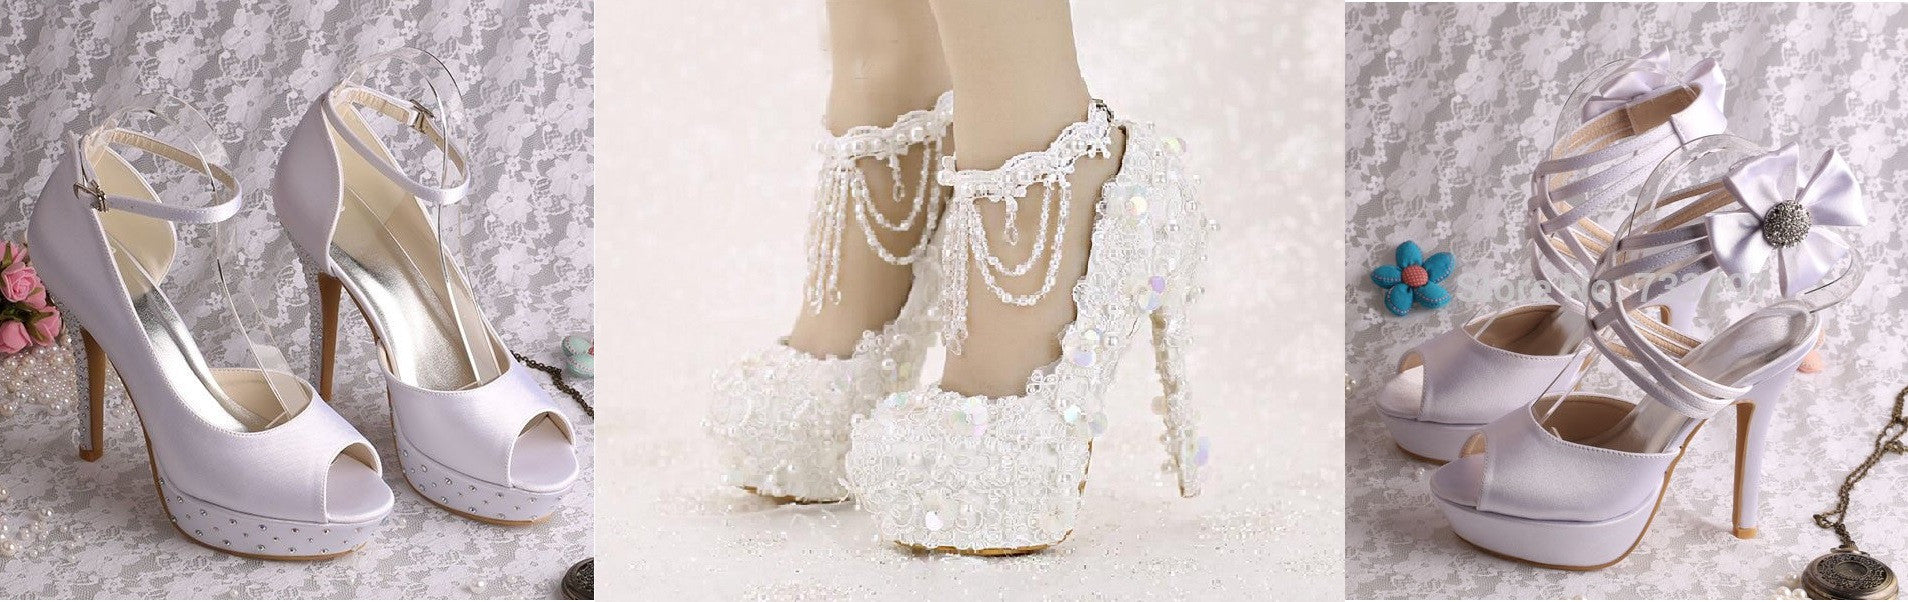 .com .com  Elivandon 16051 Wedding Shoes Bling Bridal